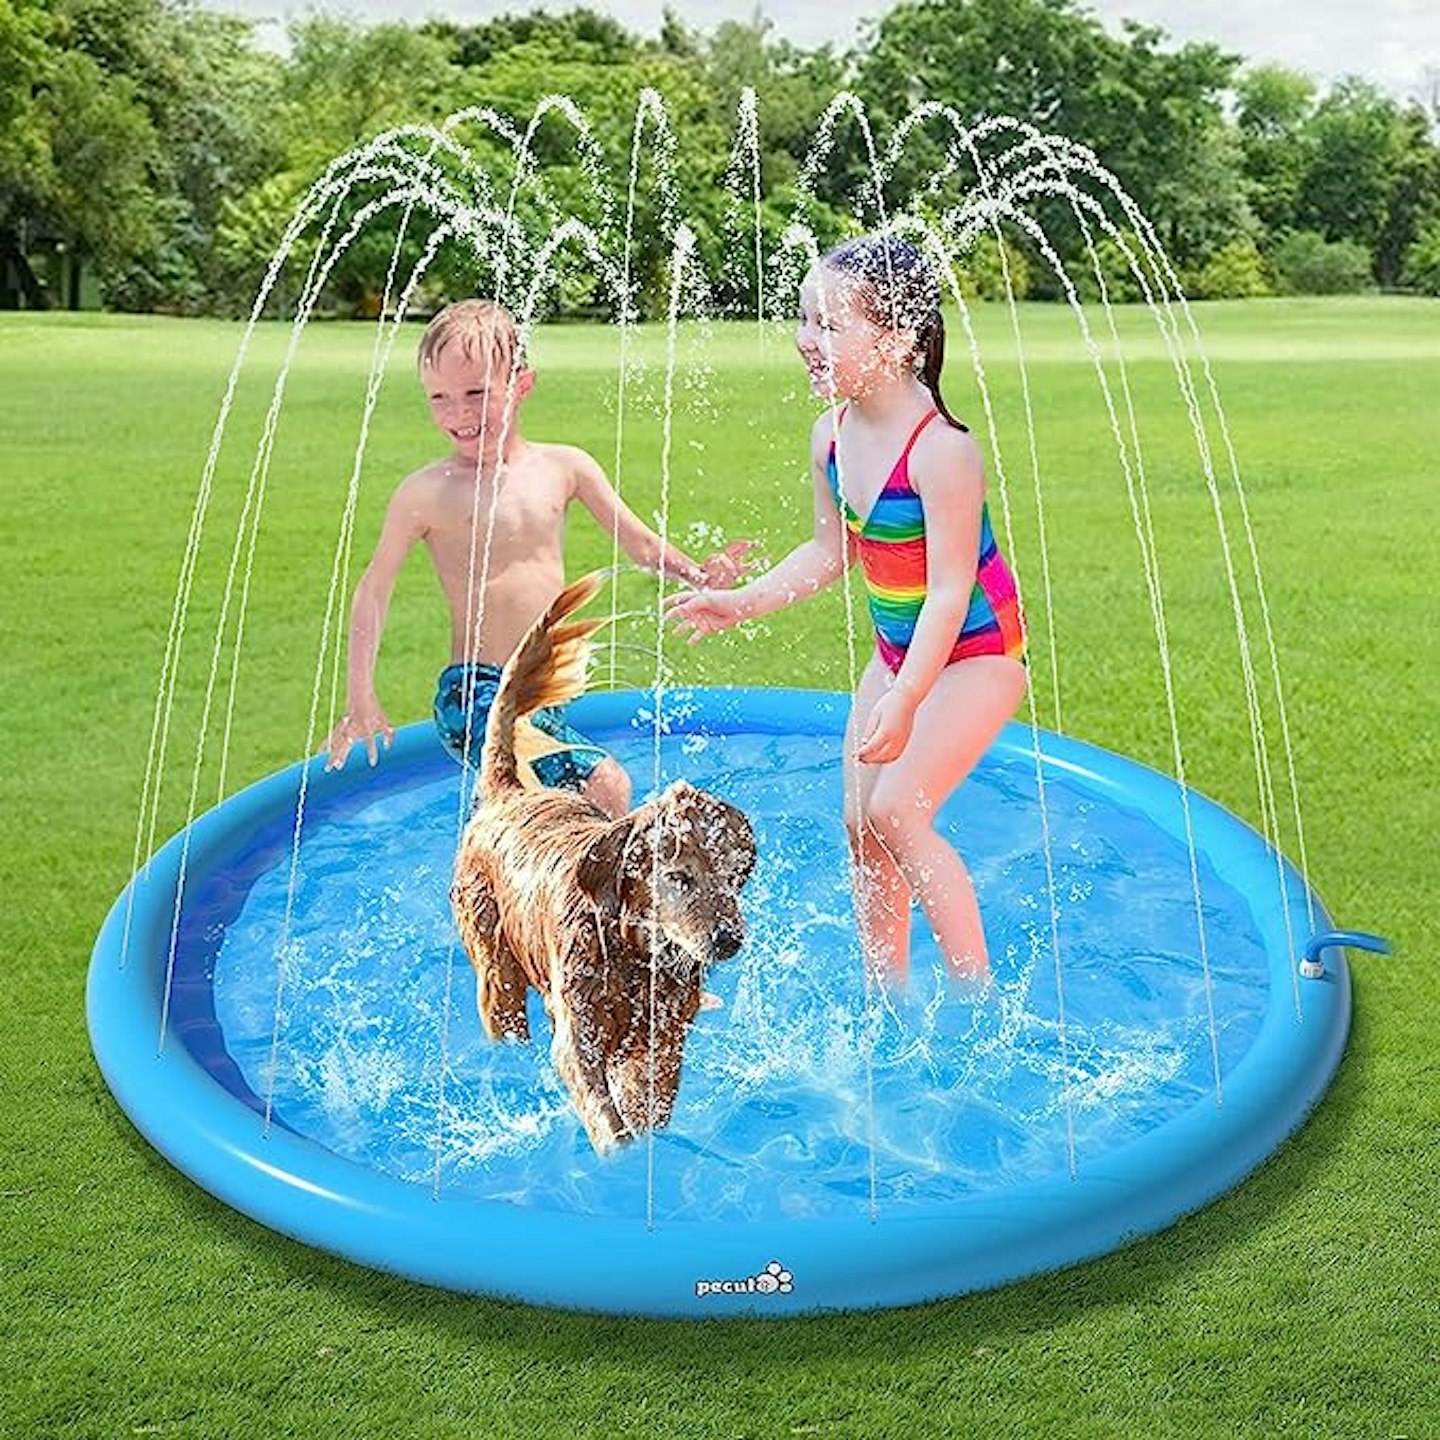 pecute Sprinkler Pad for Dogs & Kids